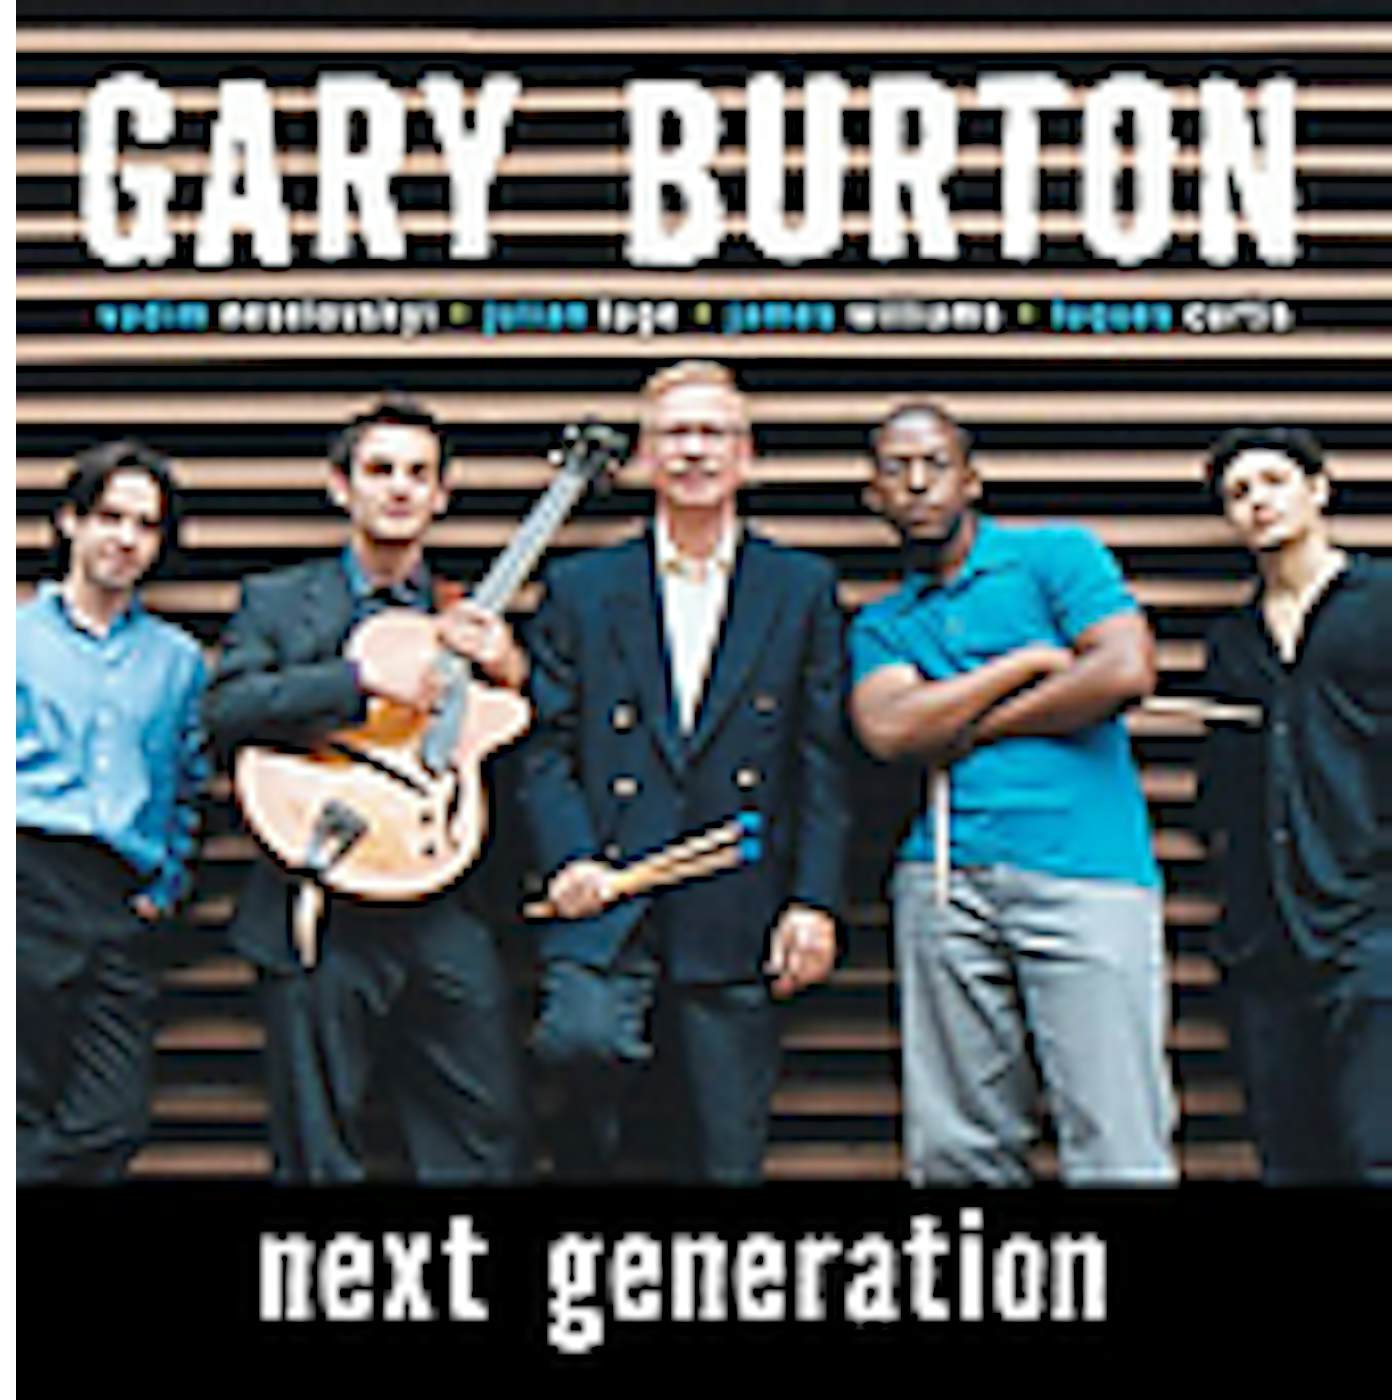 Gary Burton NEXT GENERATION CD